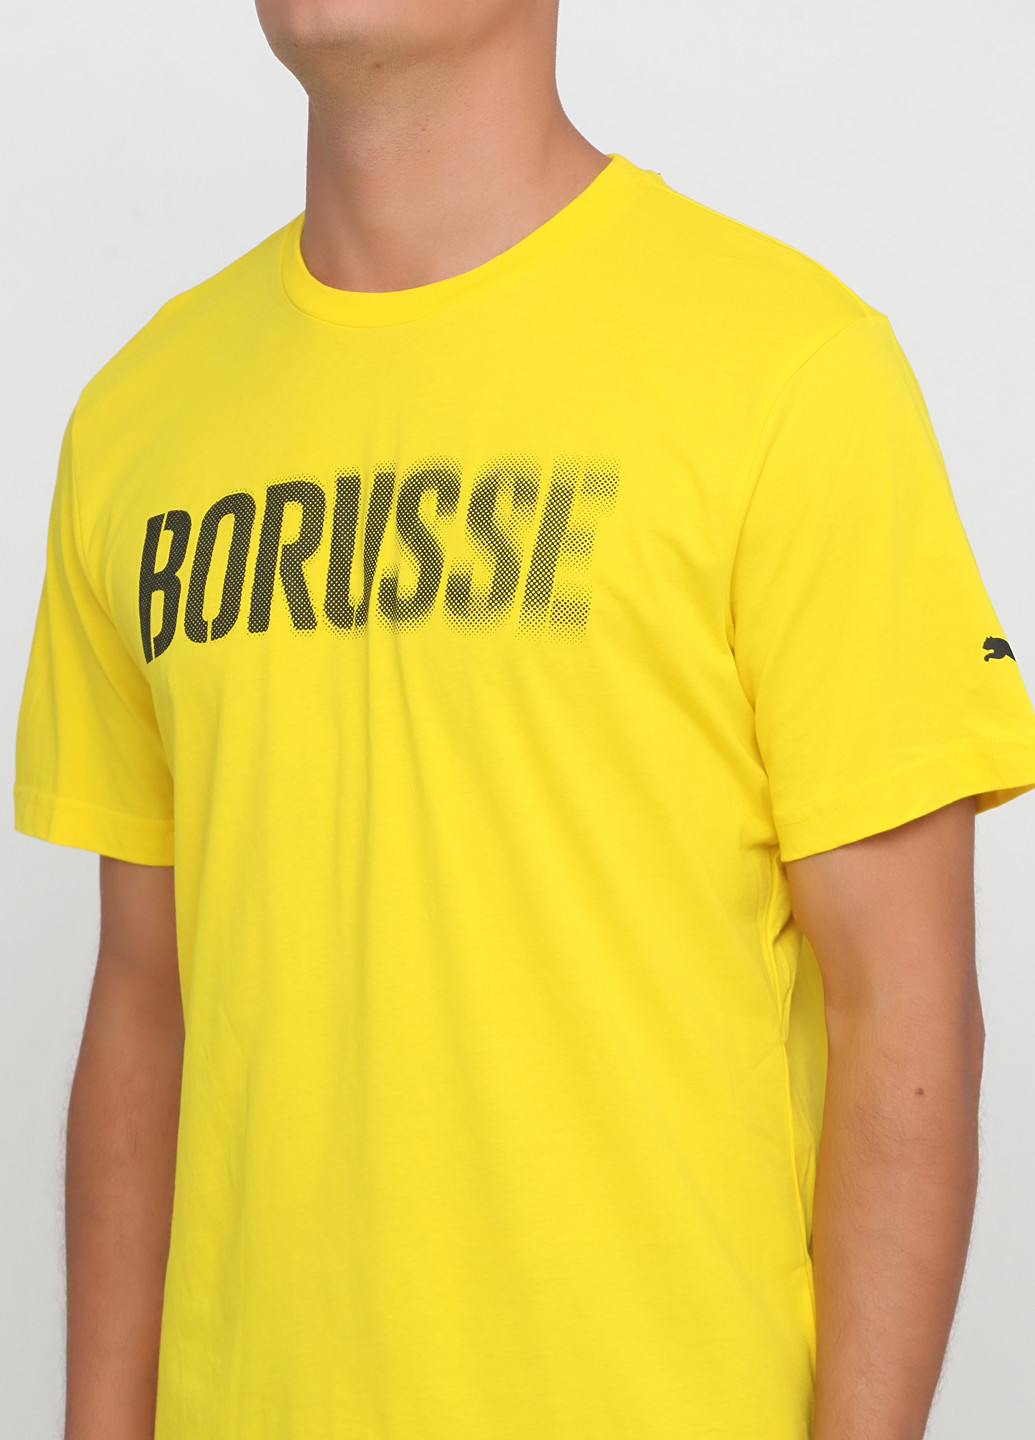 Желтая футболка Puma Borussia Dortmund Fan